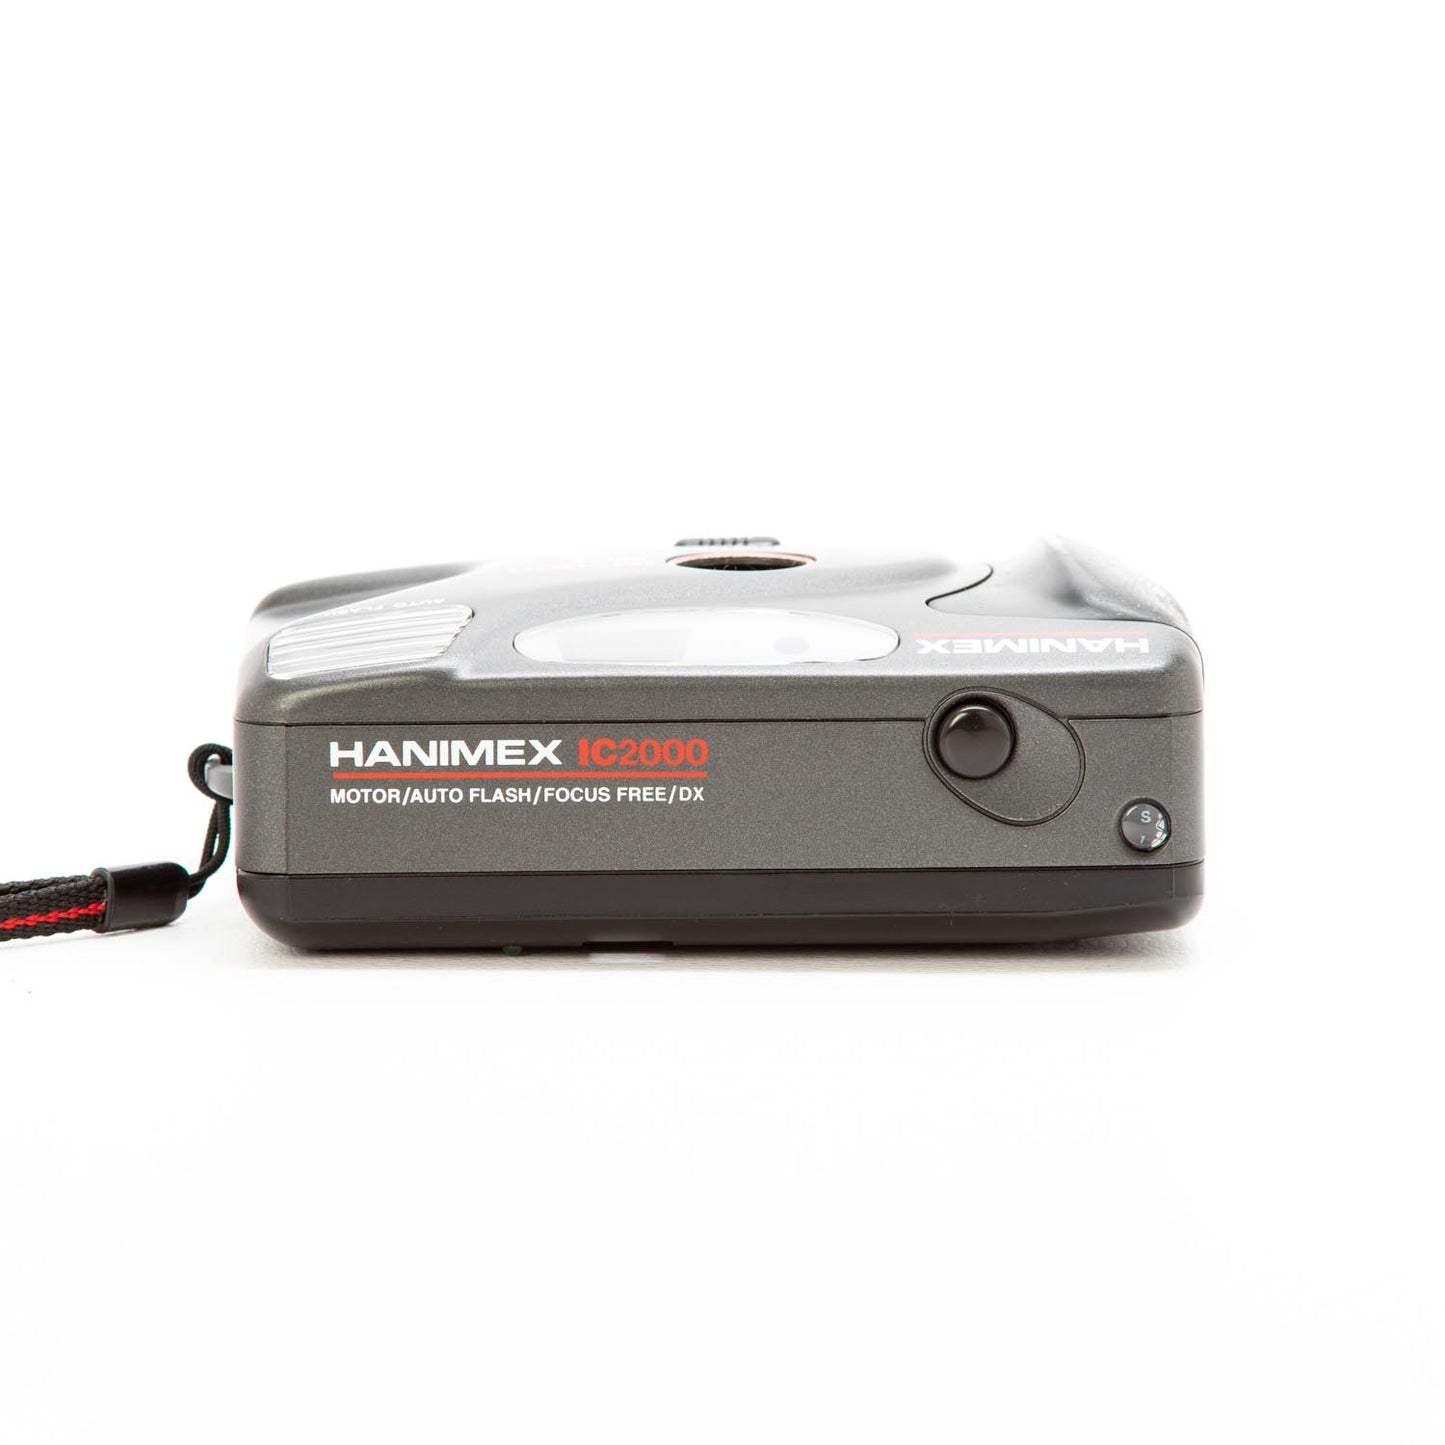 Hanimex IC 2000 Motor